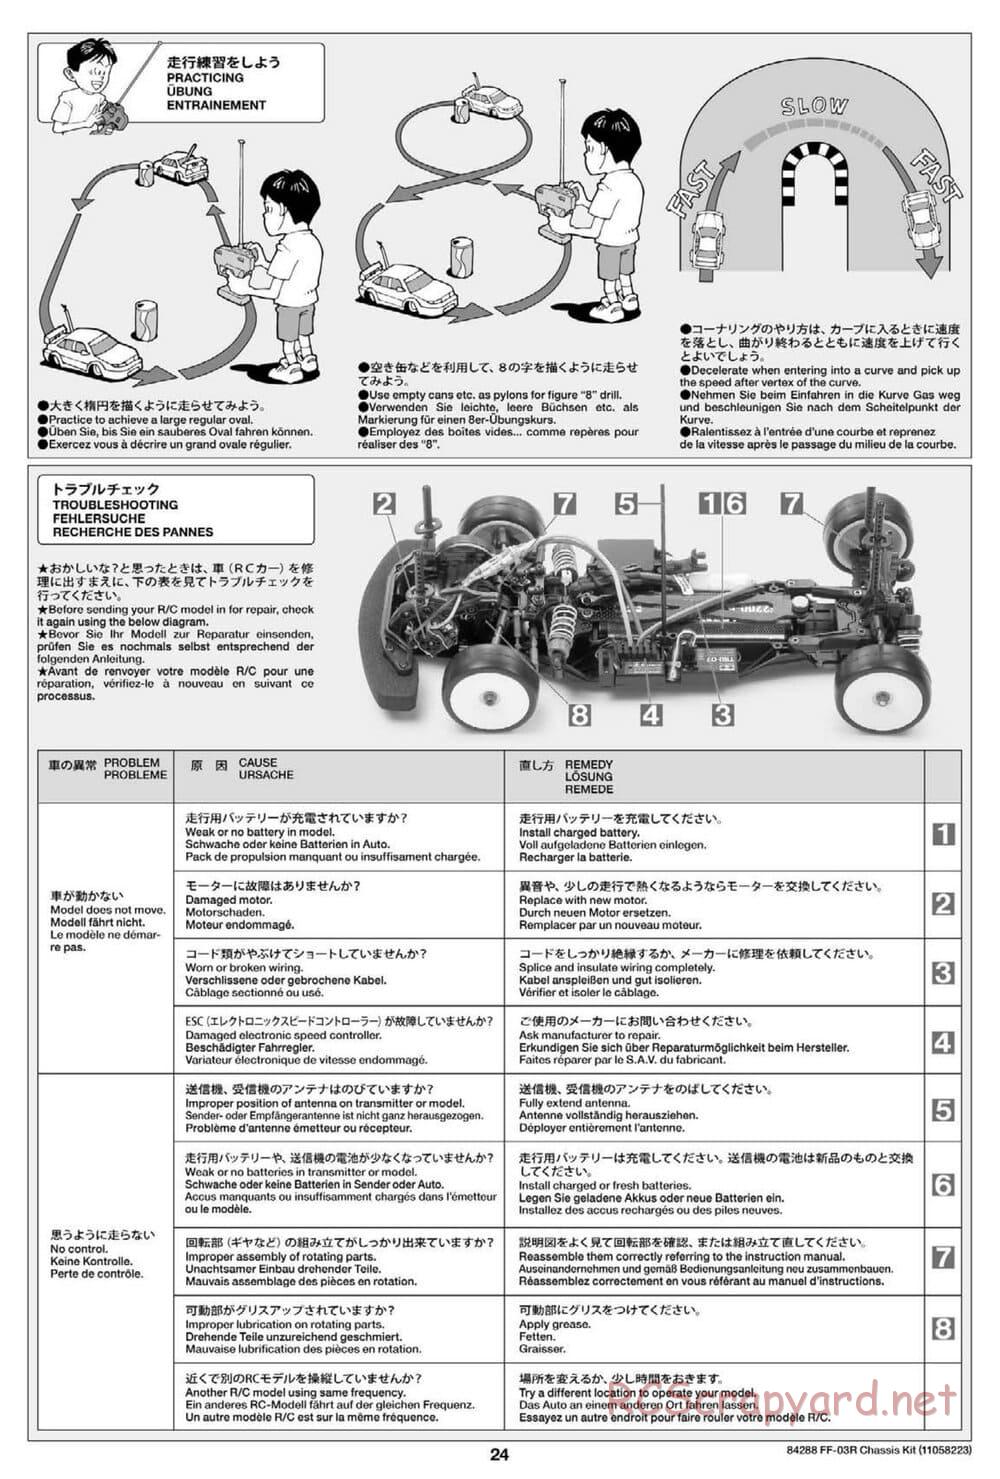 Tamiya - FF-03R Chassis - Manual - Page 26